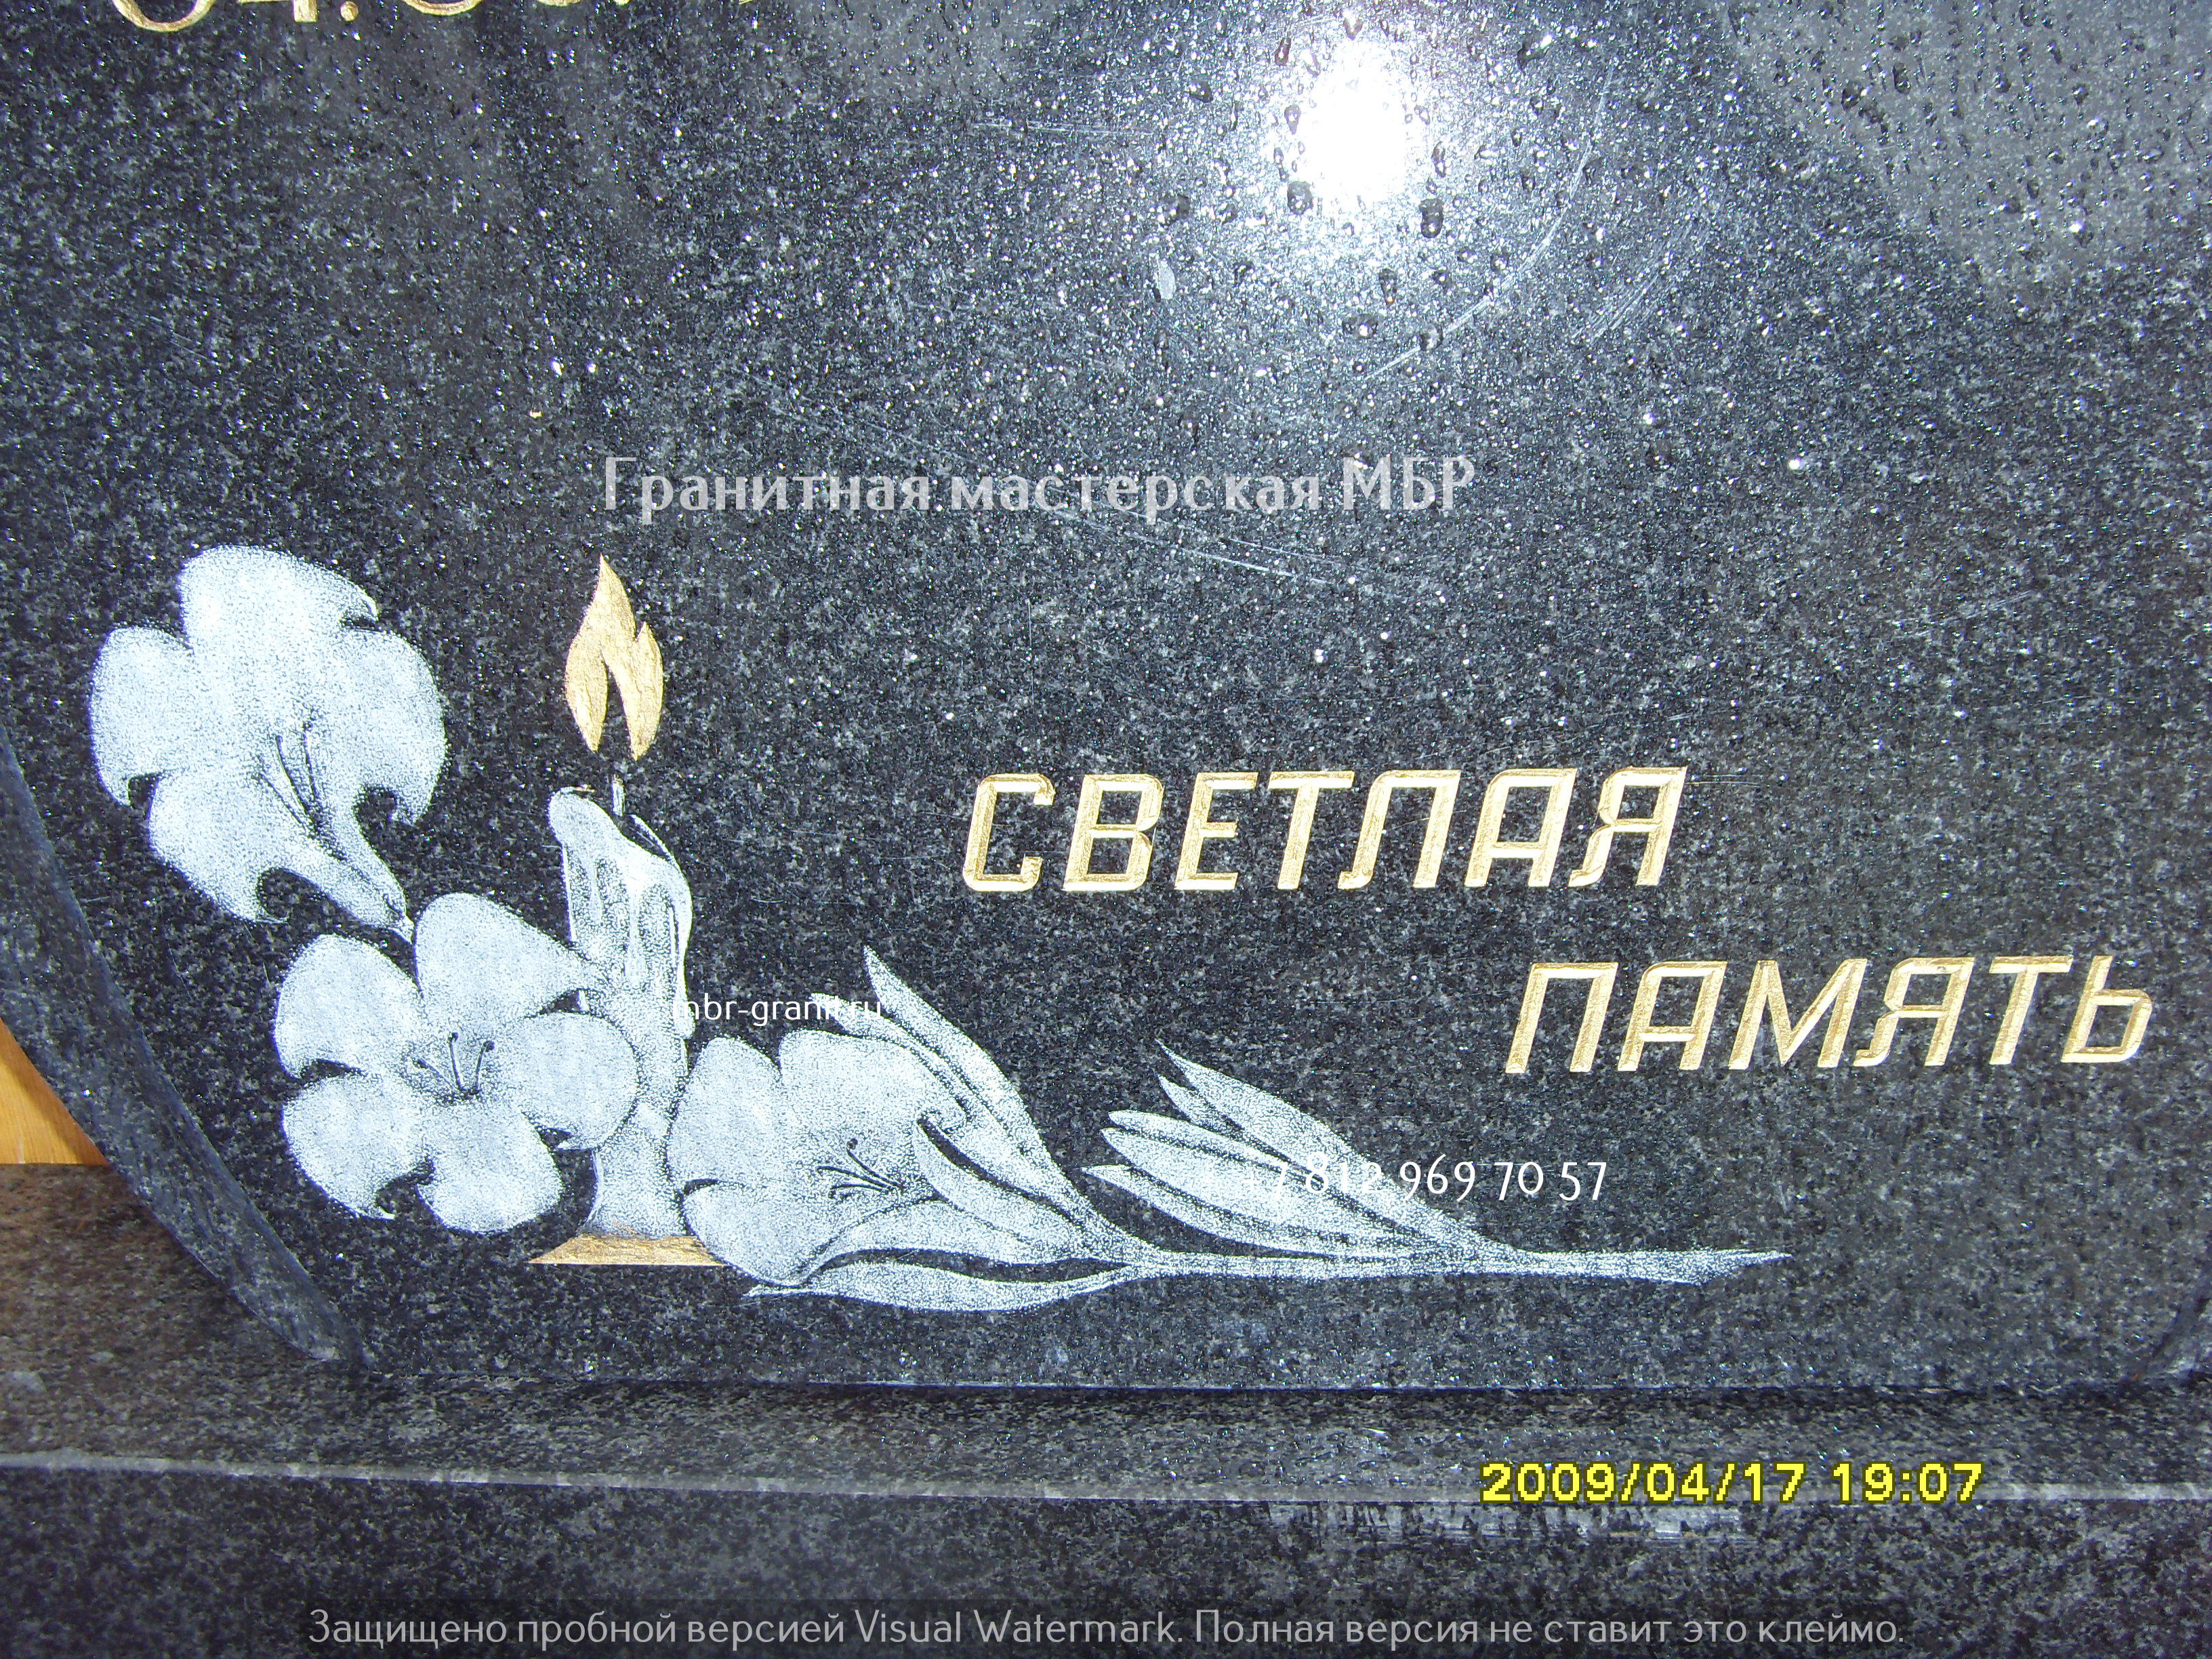 Надпись на надгробной плите